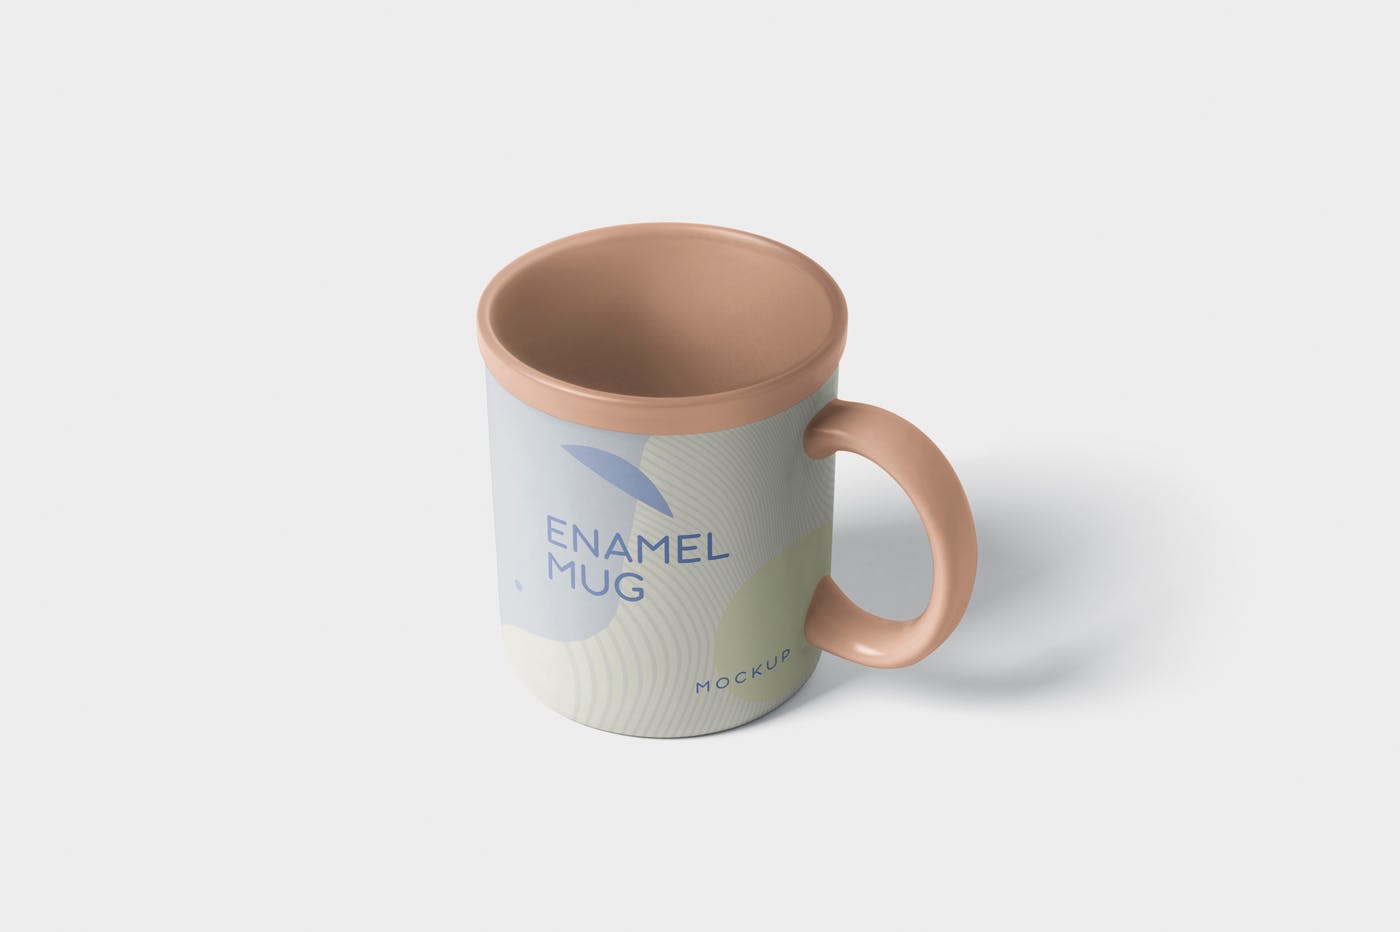 带把手圆形搪瓷杯马克杯图案设计非凡图库精选 Round Enamel Mug Mockup With Handle插图(2)